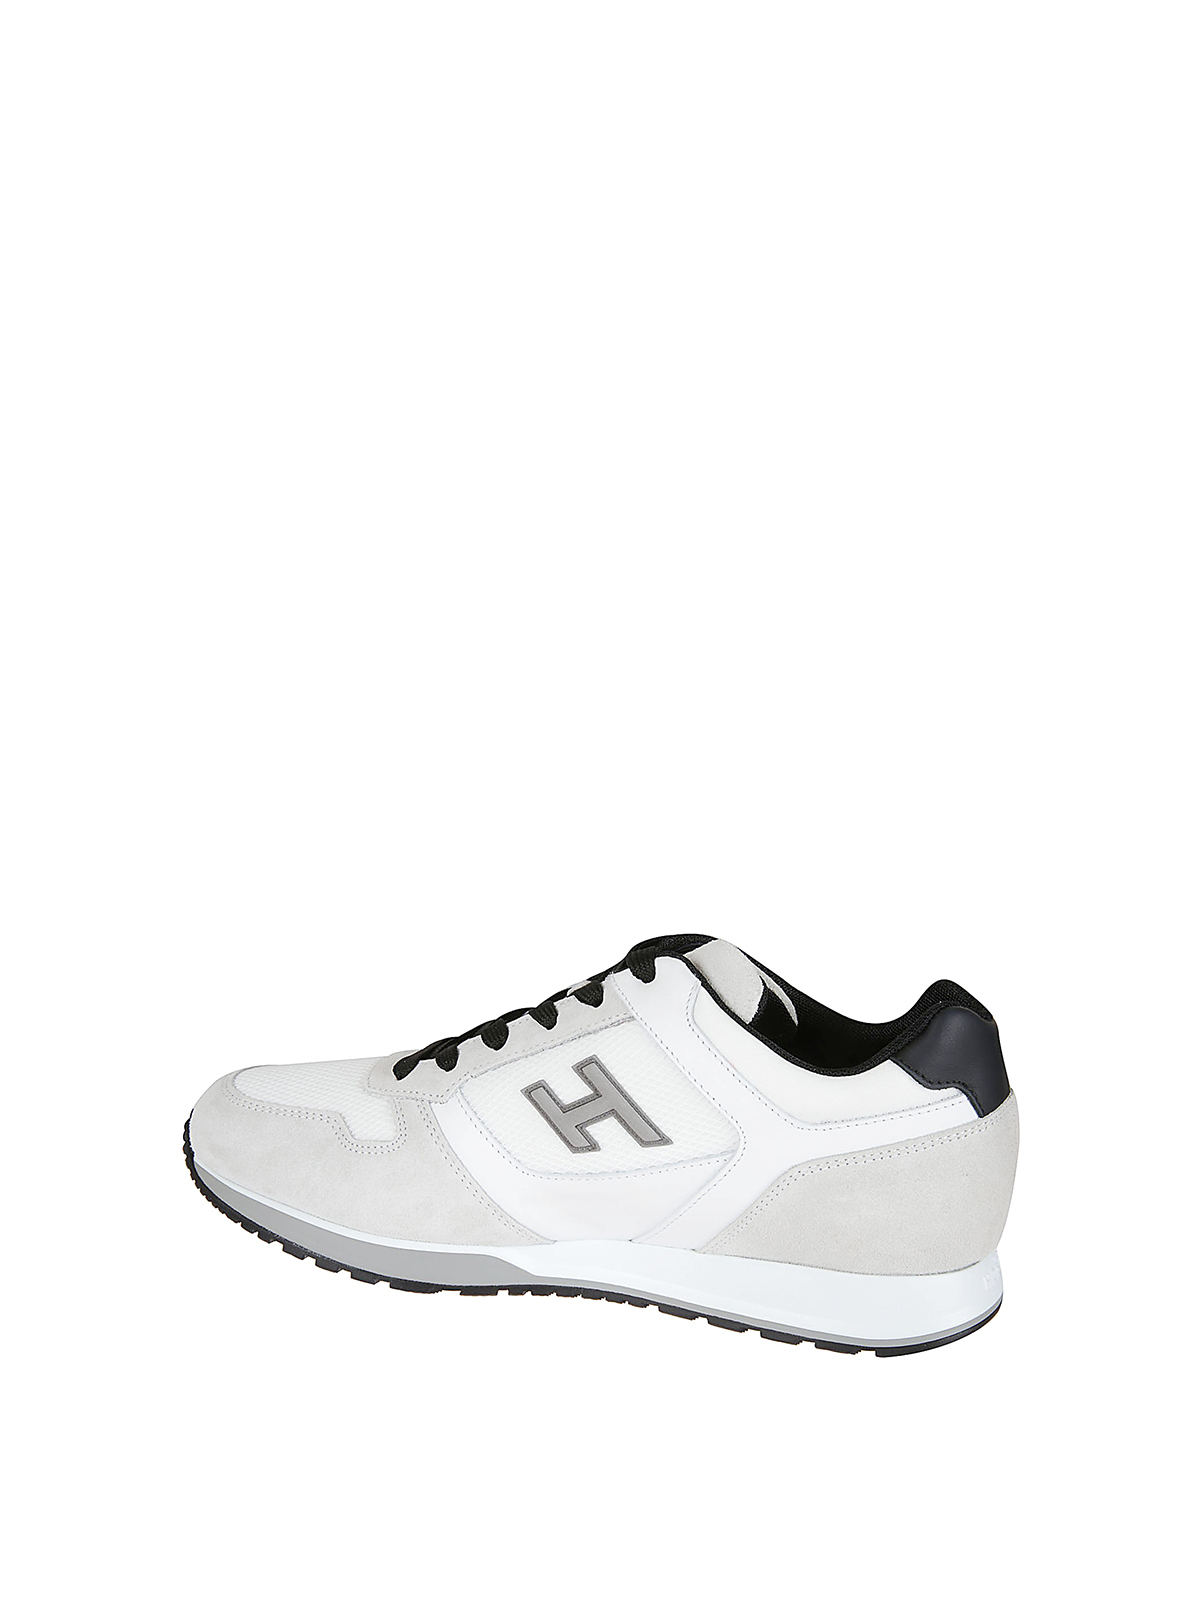 Trainers Hogan - H321 sneakers - HXM3210Y860QZA0001 | Shop online at iKRIX